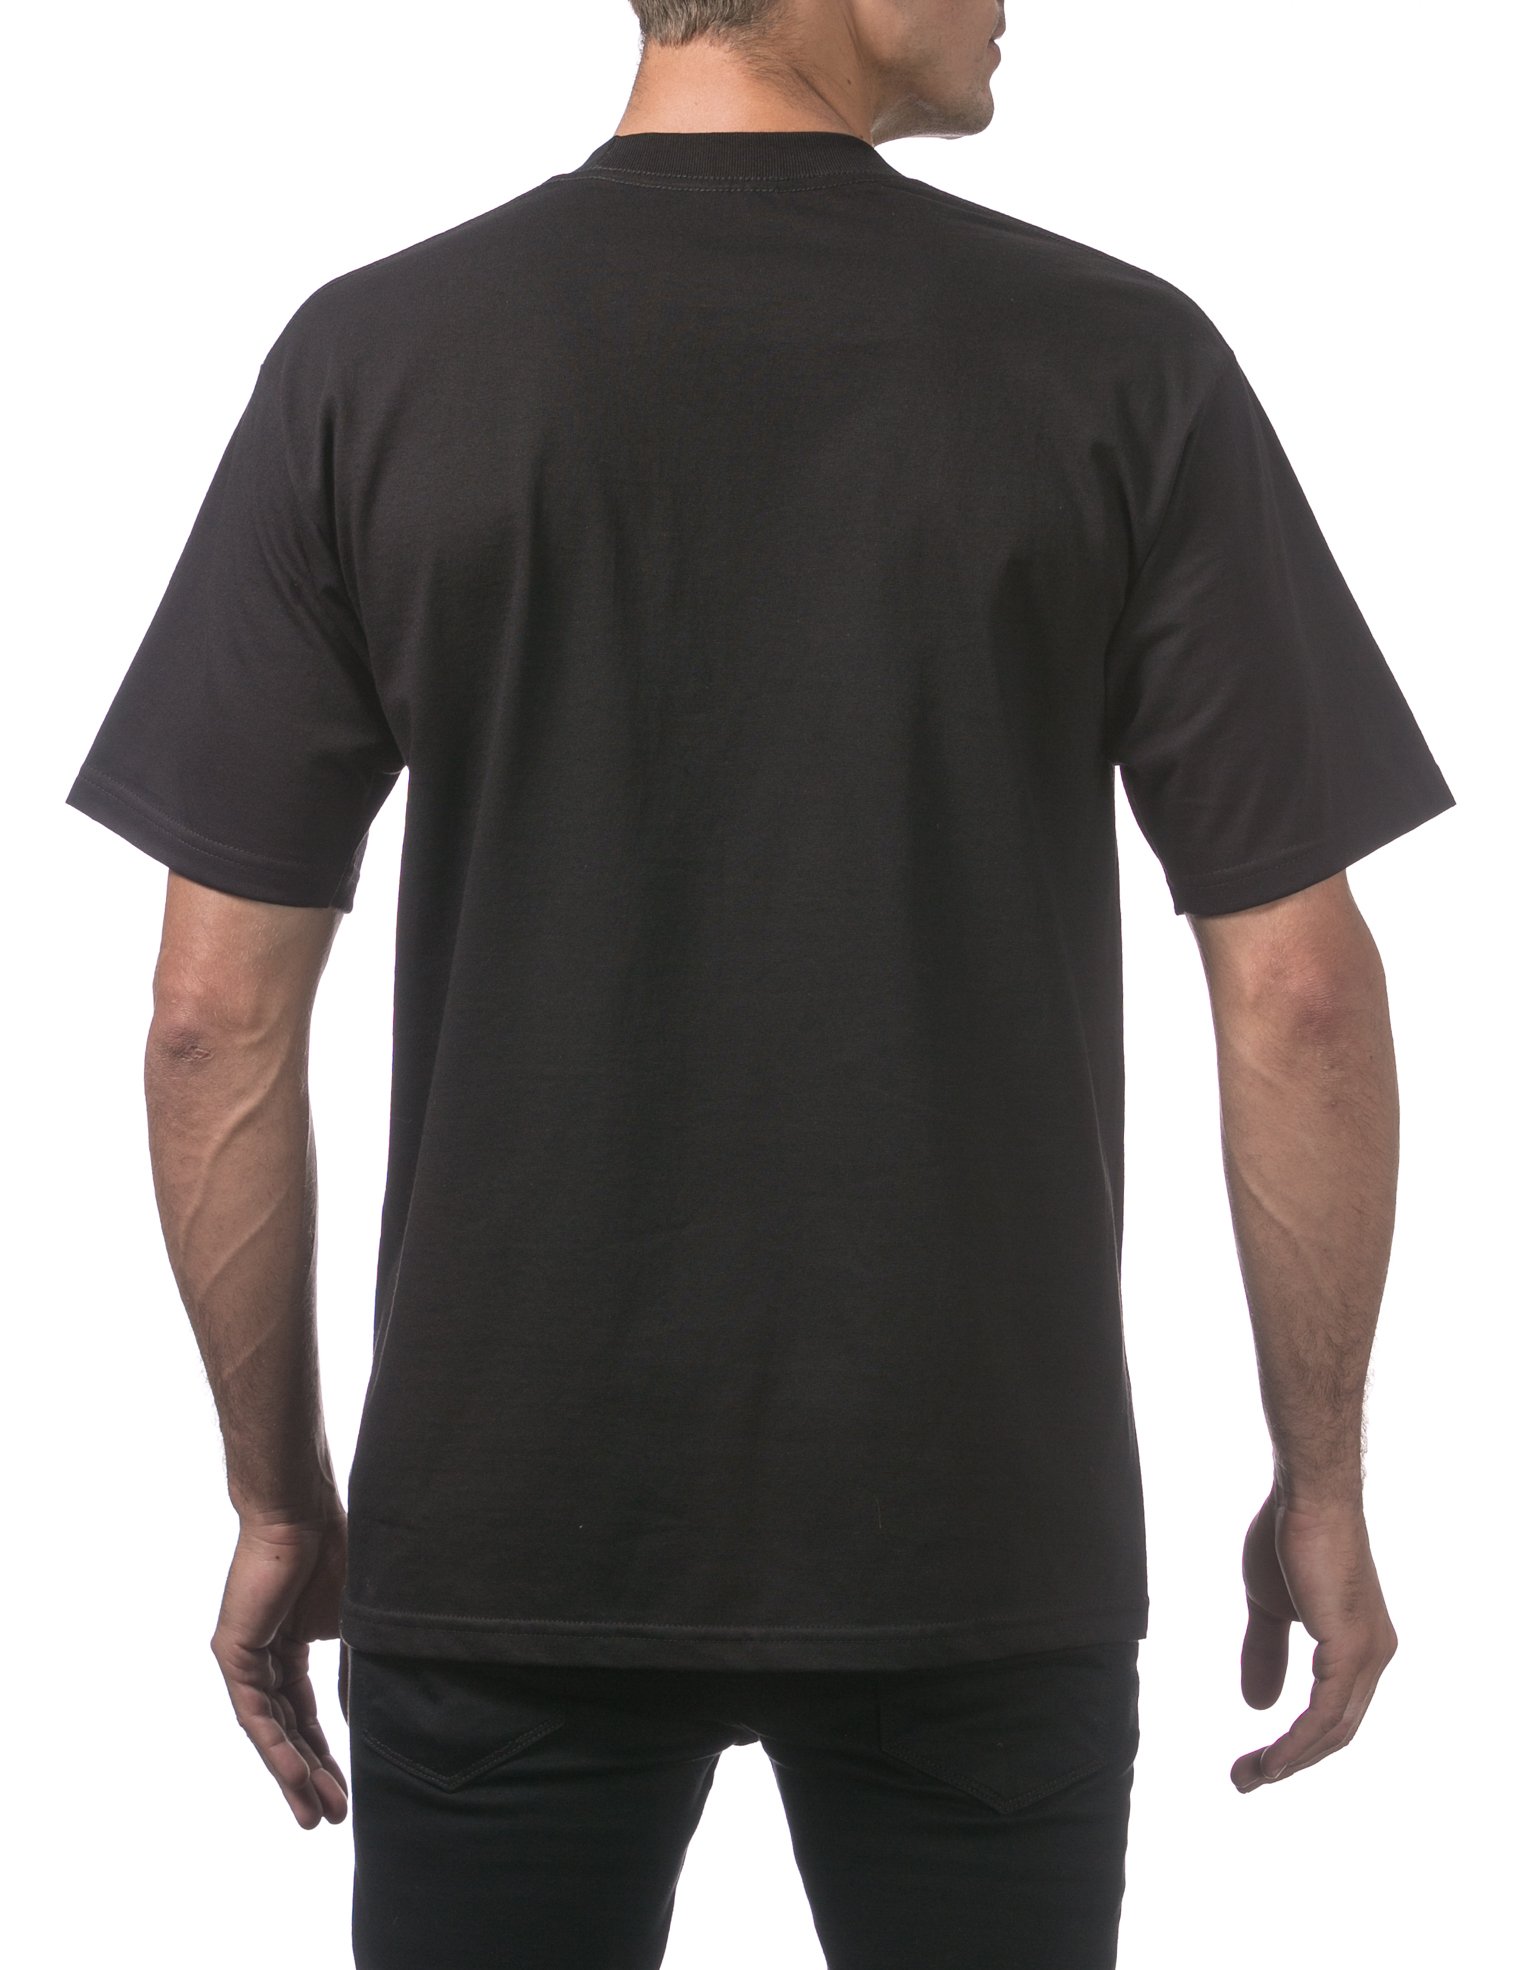 Pro Club Men's 12-Pack Heavyweight Cotton Short Sleeve Crew Neck T-Shirt, Black, 4X-Large